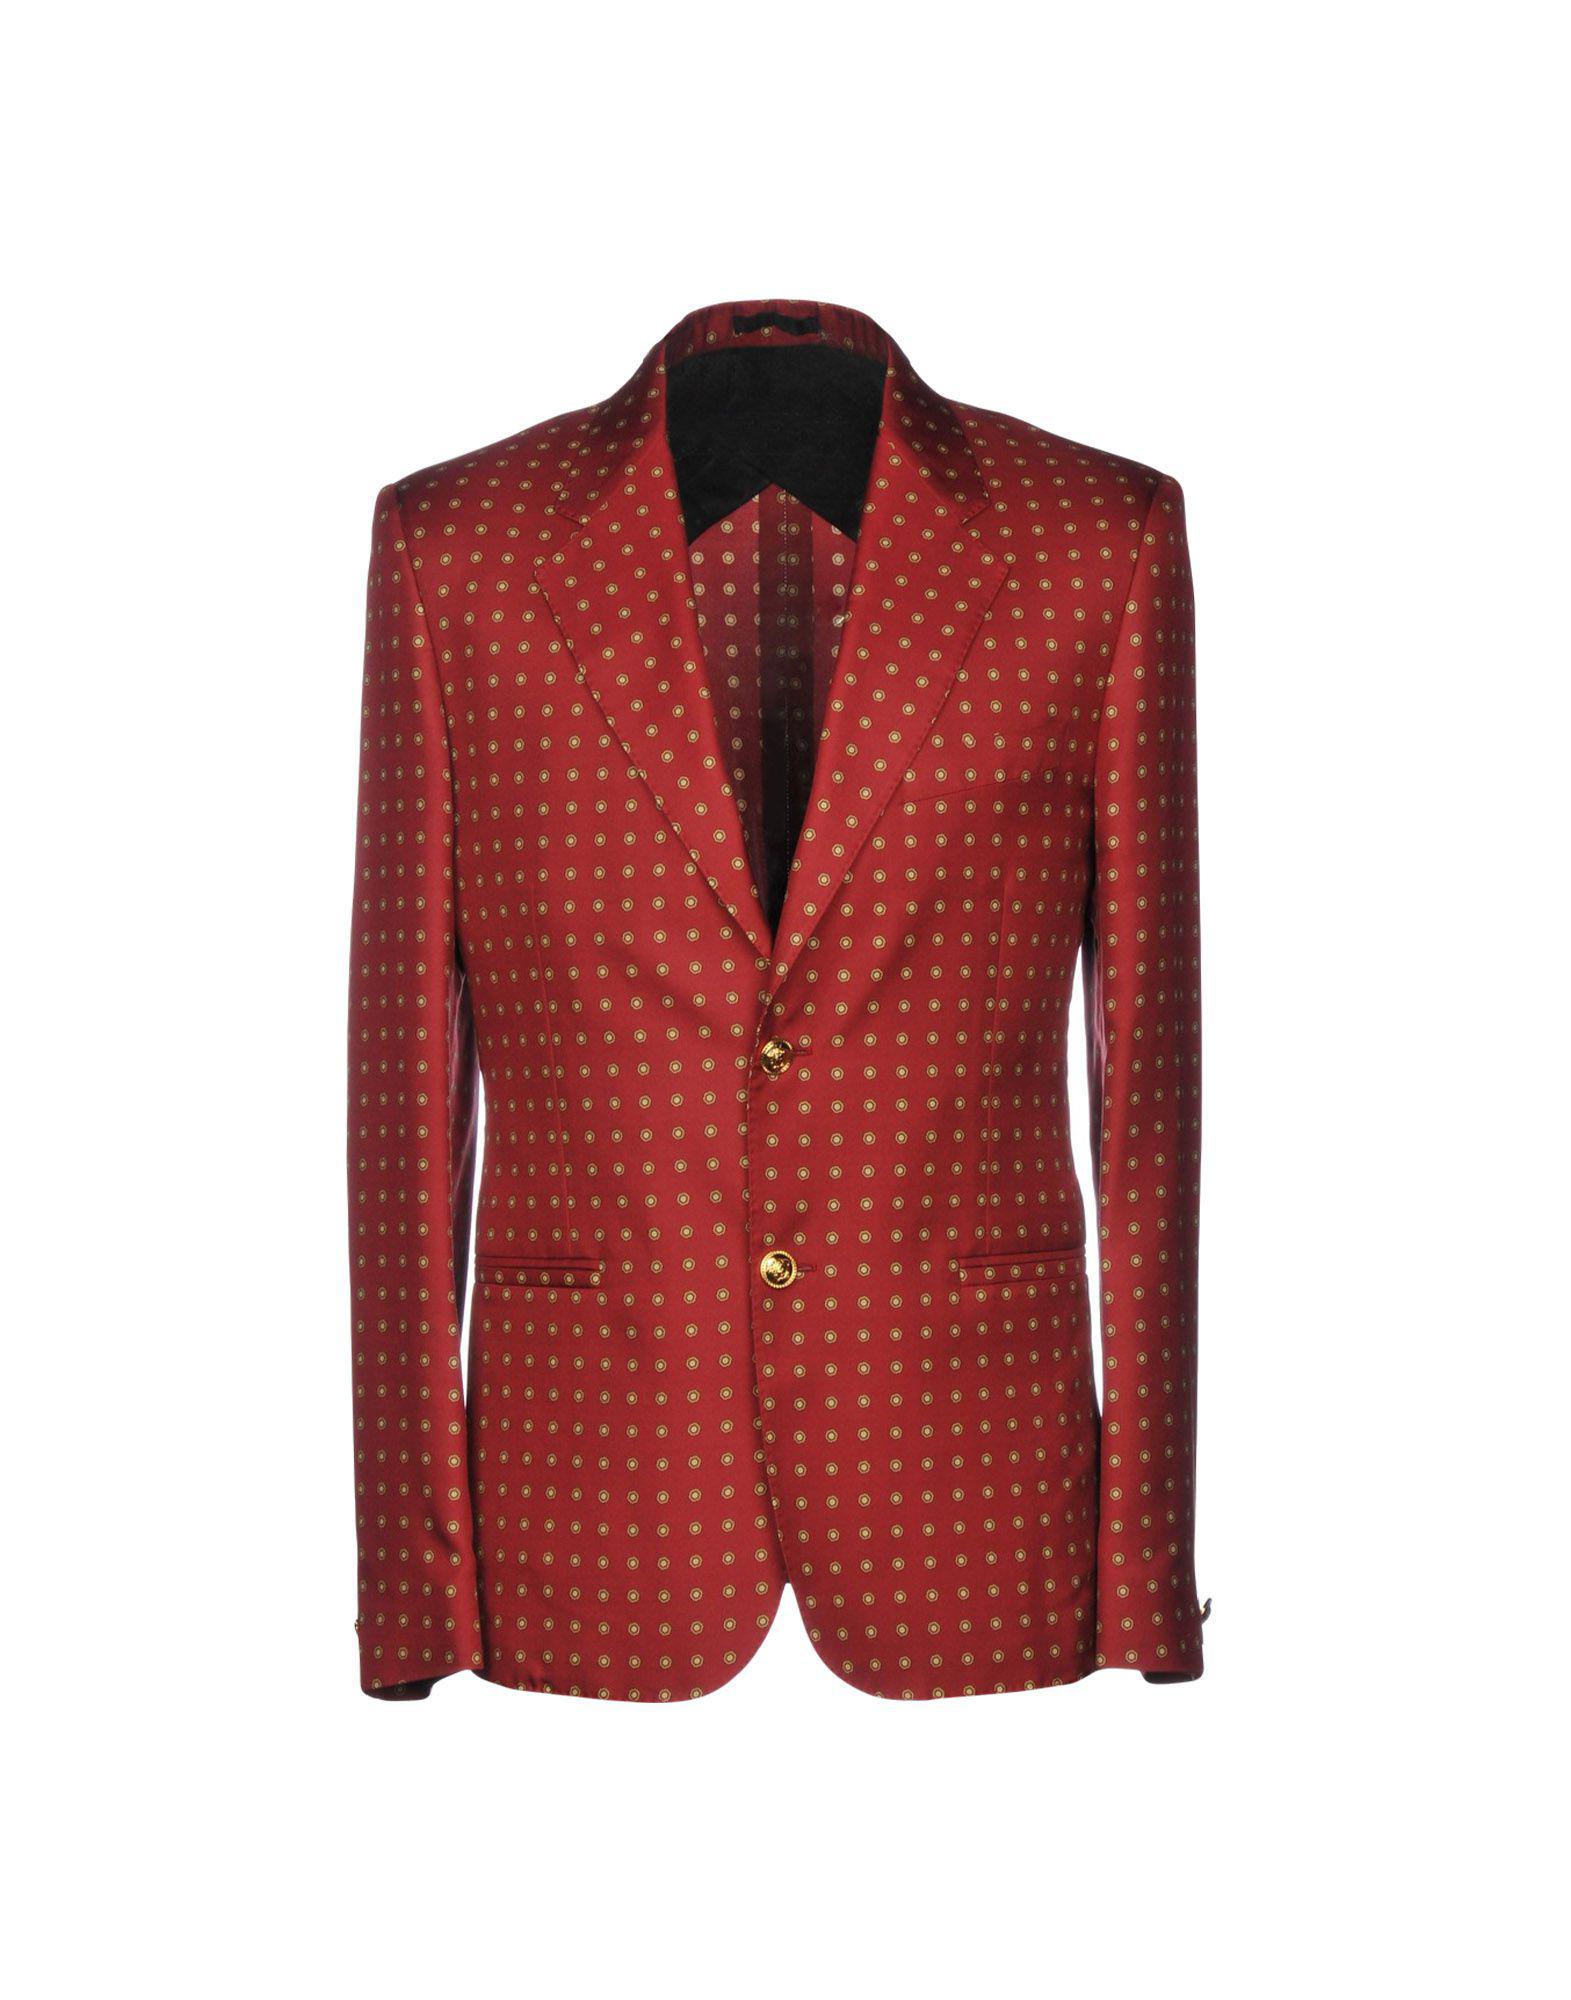 Versace Satin Suit Jacket in Red for Men - Lyst